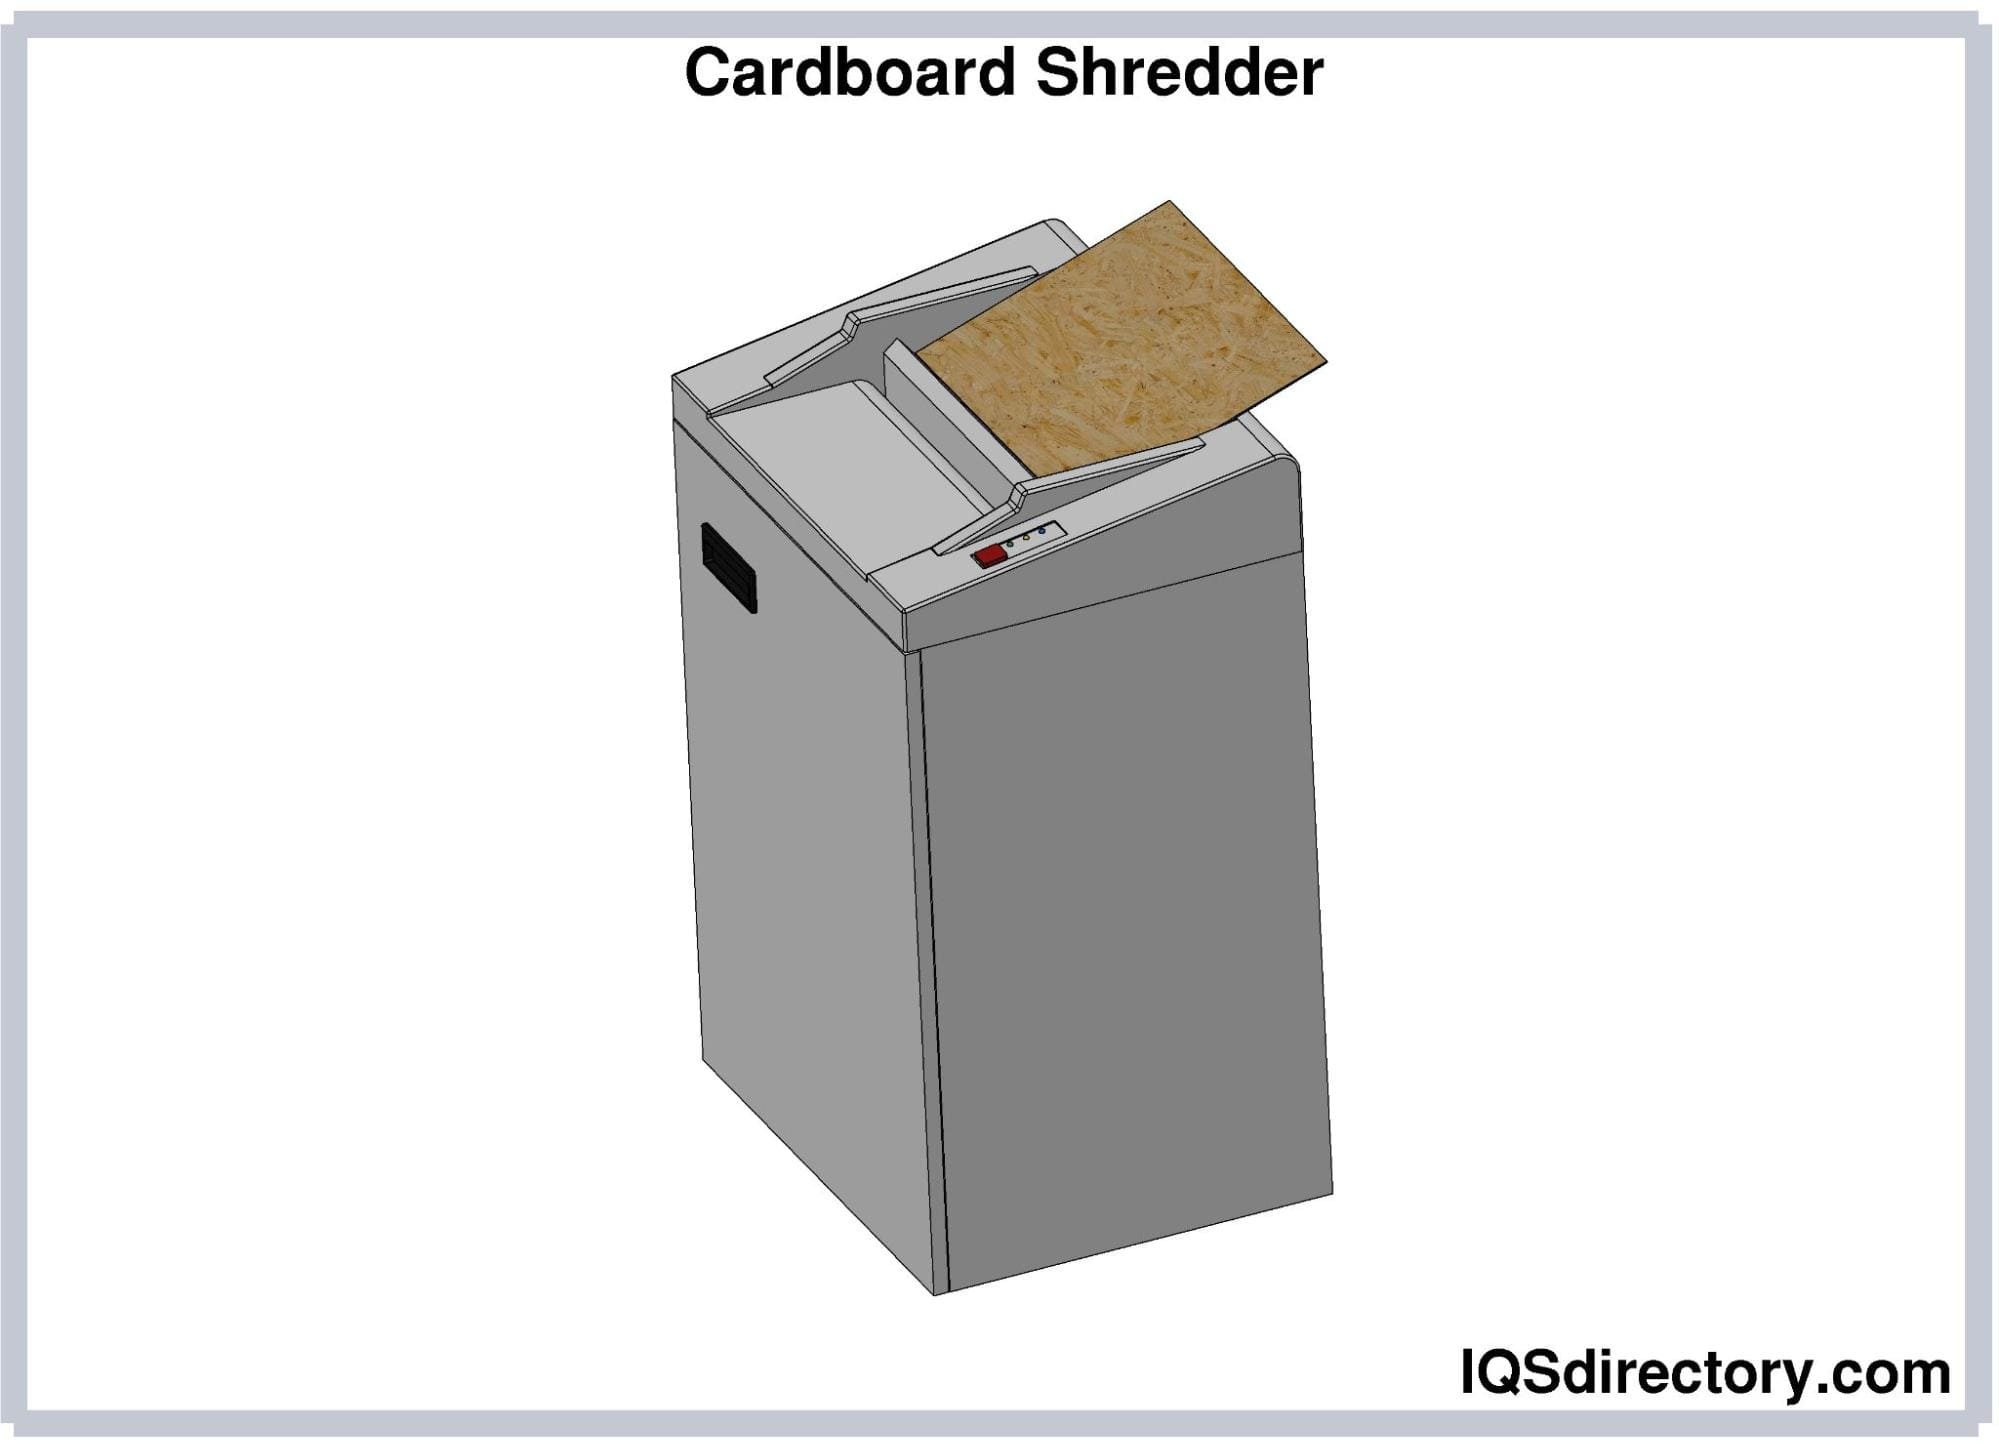 A Better Solution To A Broken Shredder